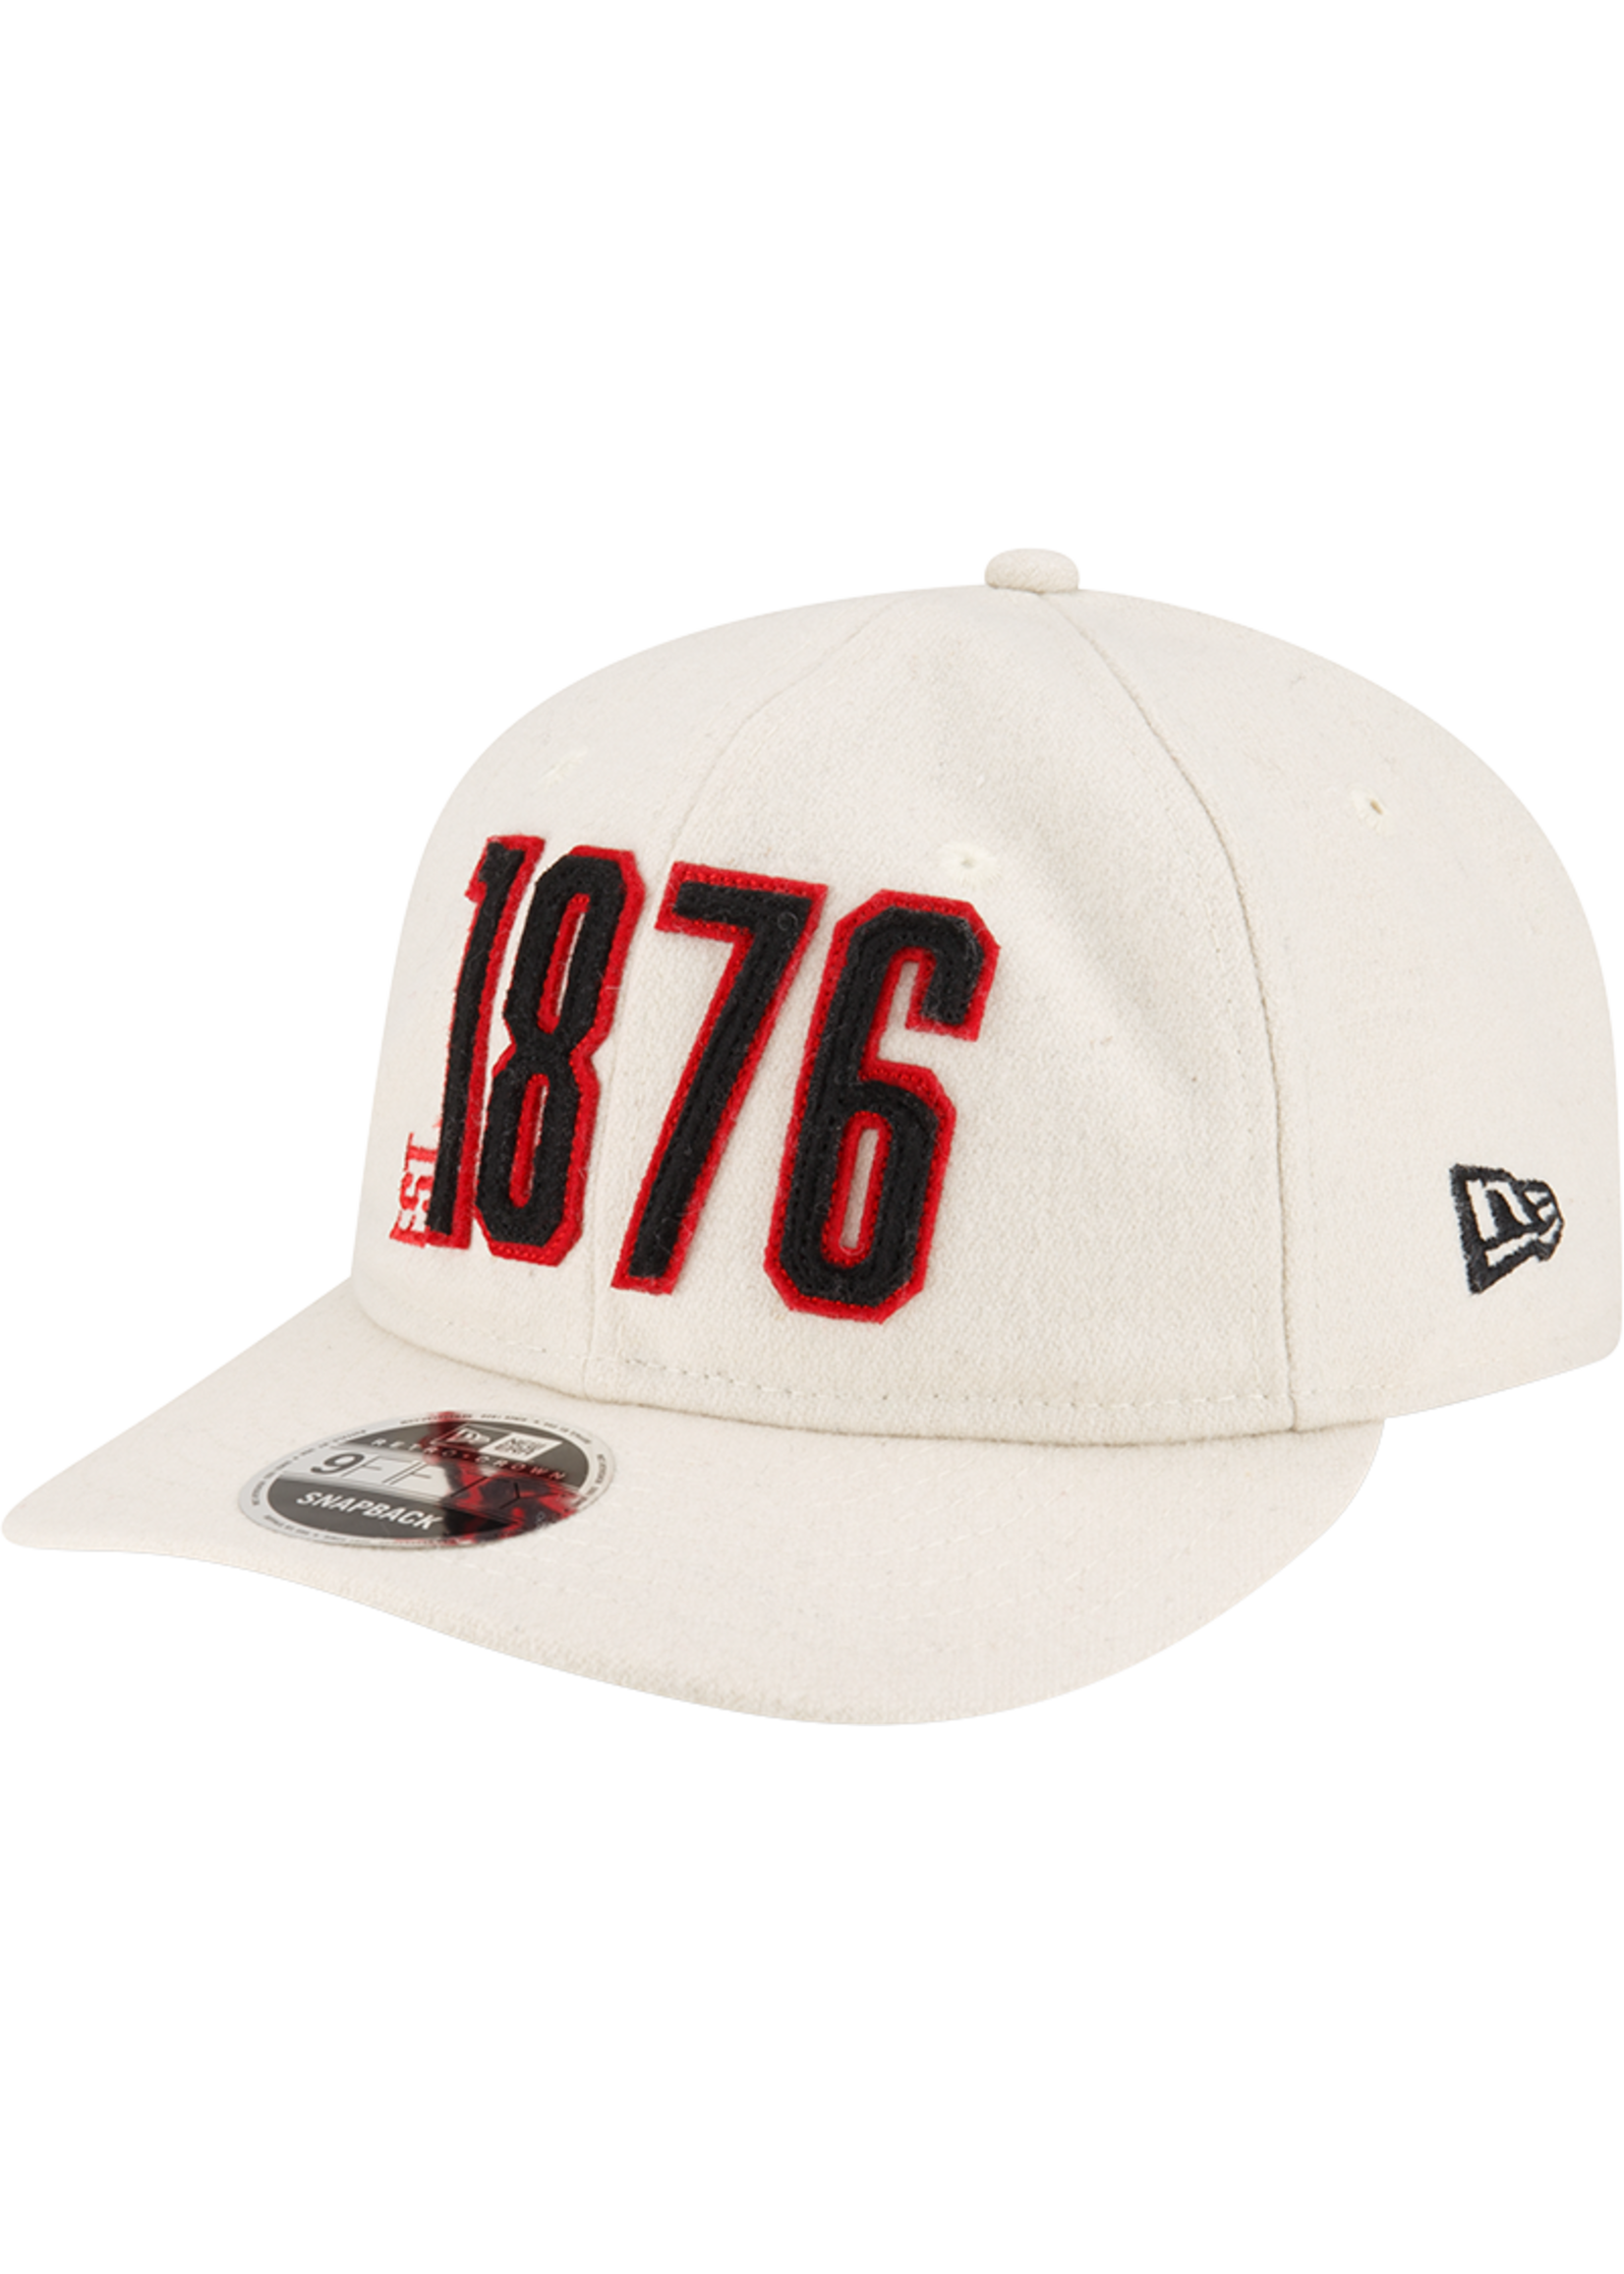 REDBLACKS REDBLACKS 1876 Retro Crown 950 Hat